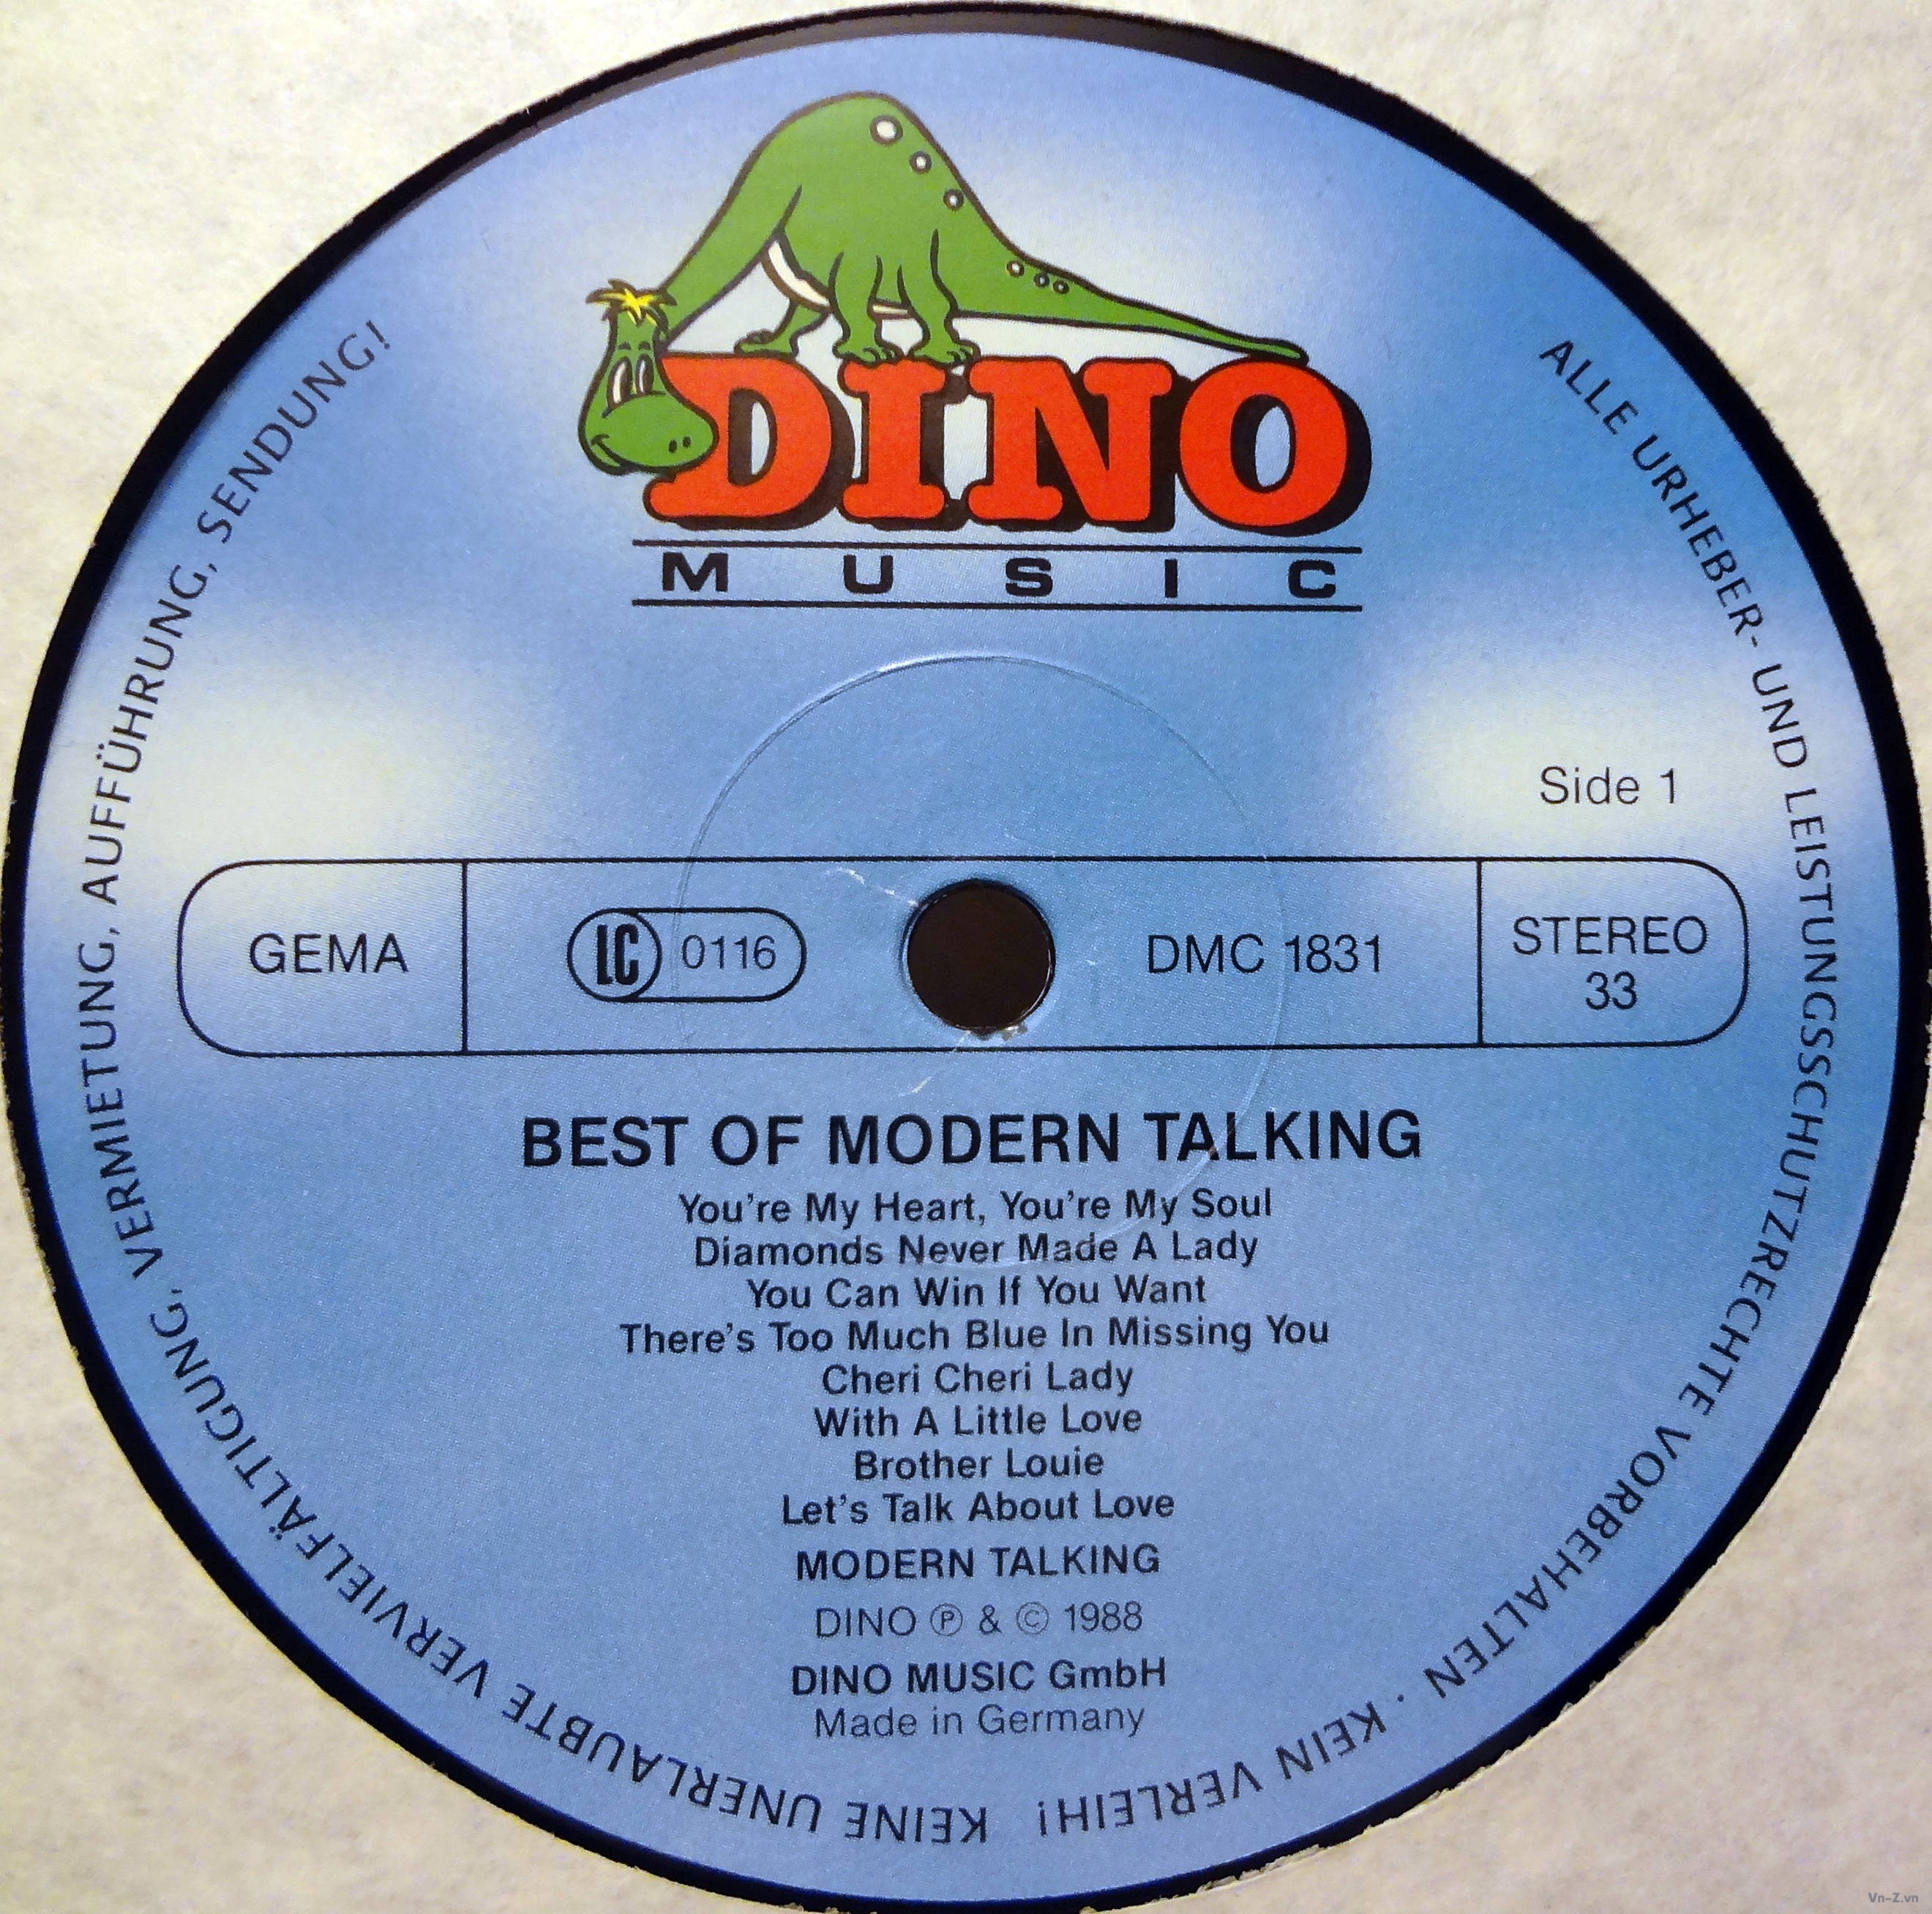 Modern talking romance. Modern talking ready for Romance 1986 LP. Modern talking 1988. Modern talking ready for Romance. Modern talking ready for Romance 1986.